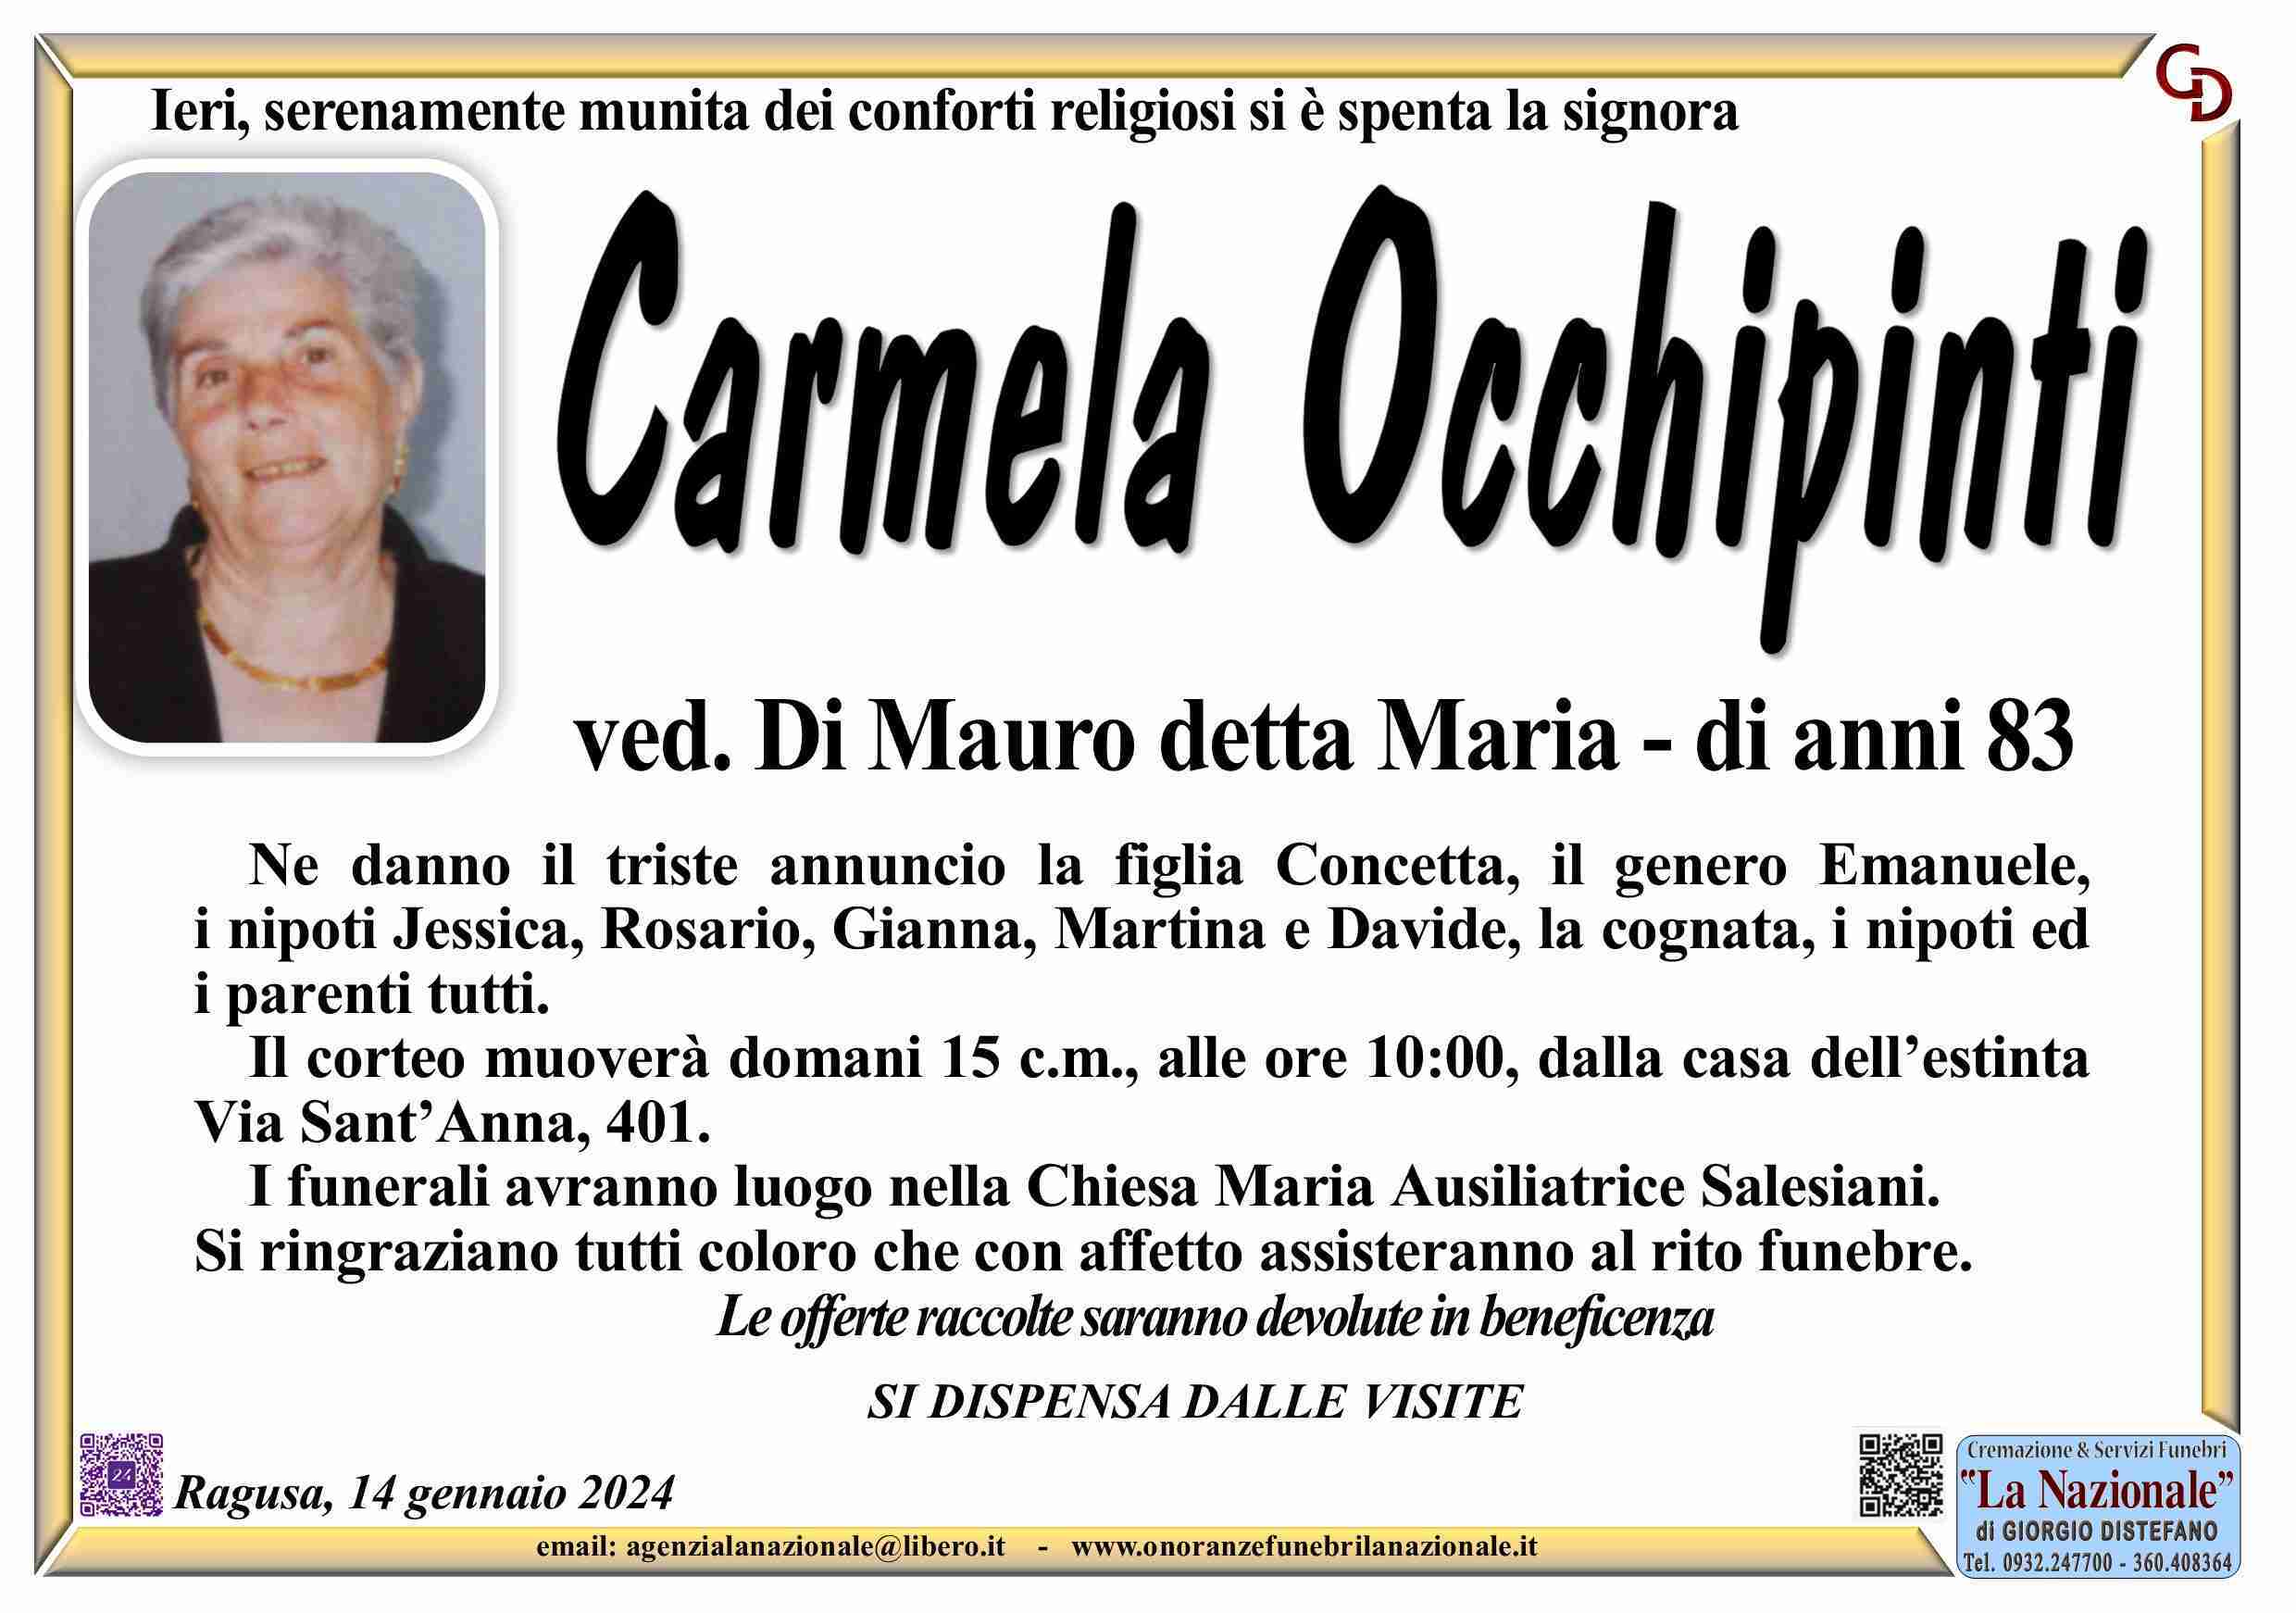 Carmela Occhipinti